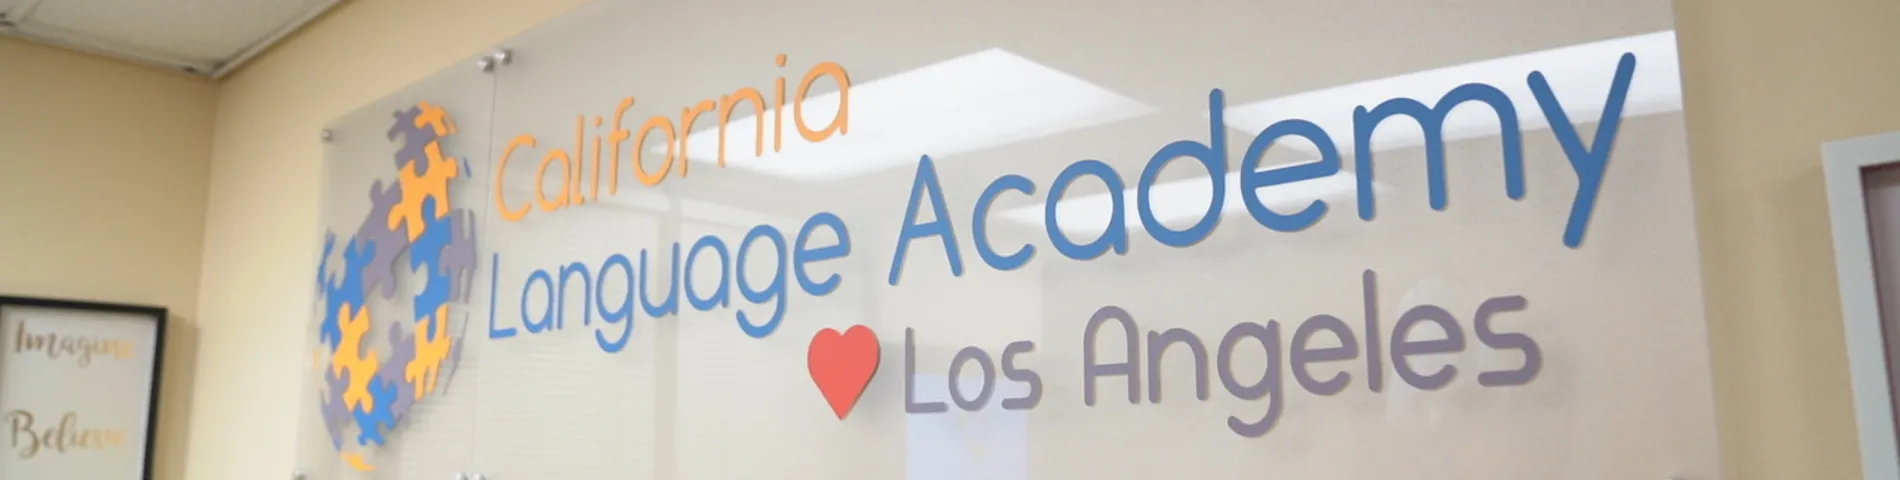 California Language Academy 사진 1